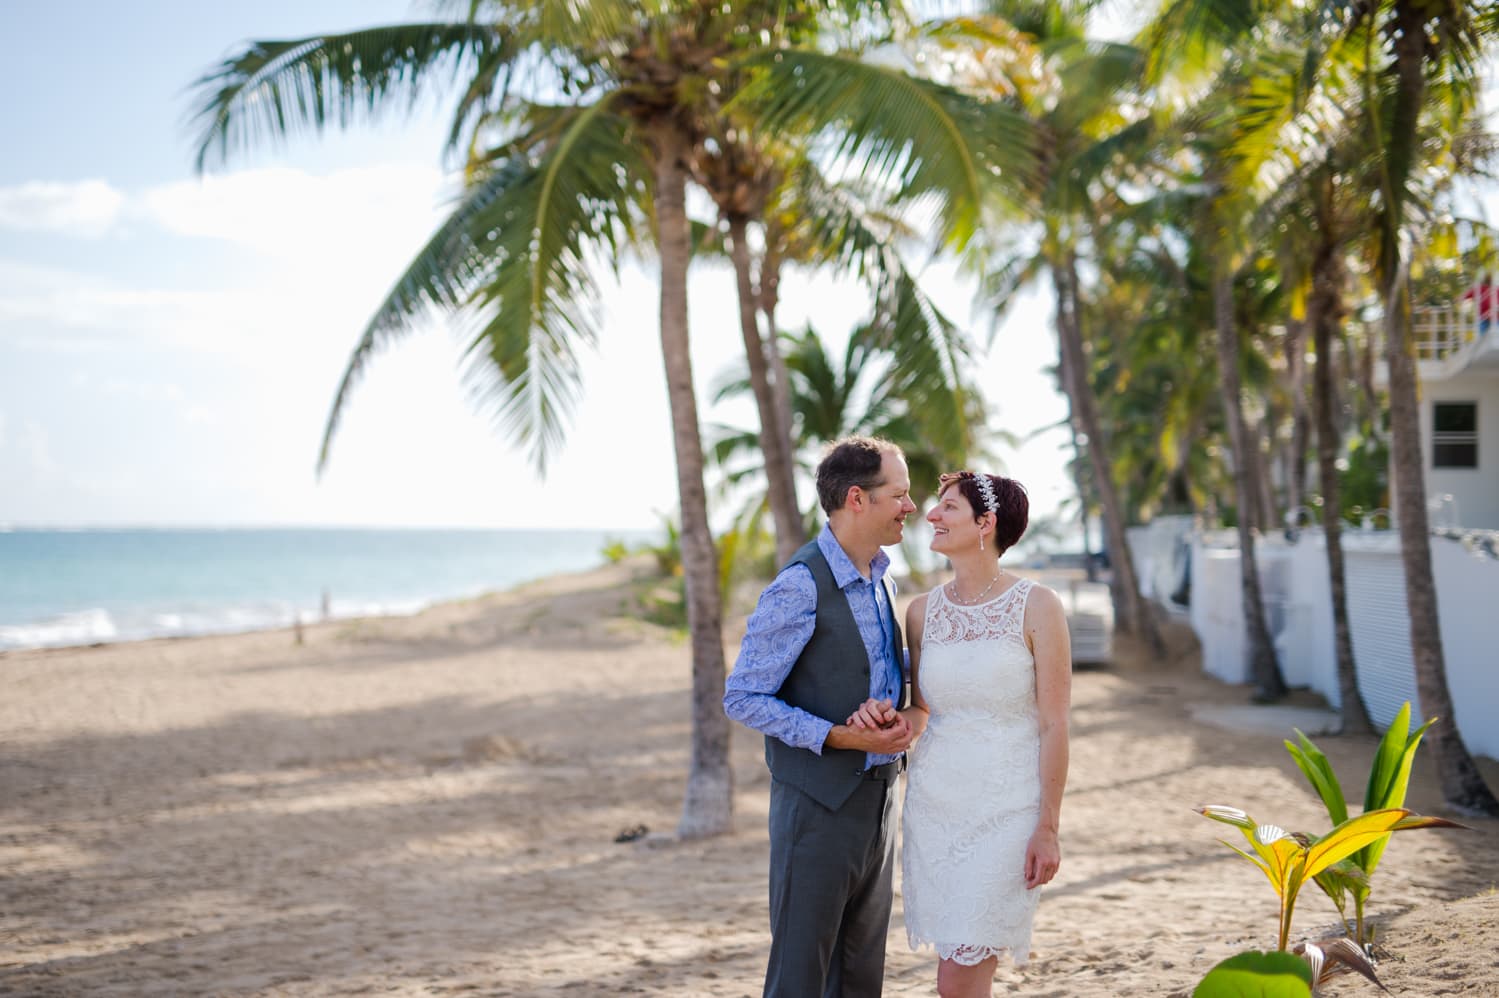 Elopement photography in Ocean Park, Condado and Calle Loiza by Puerto Rico wedding photographer Camille Fontanez